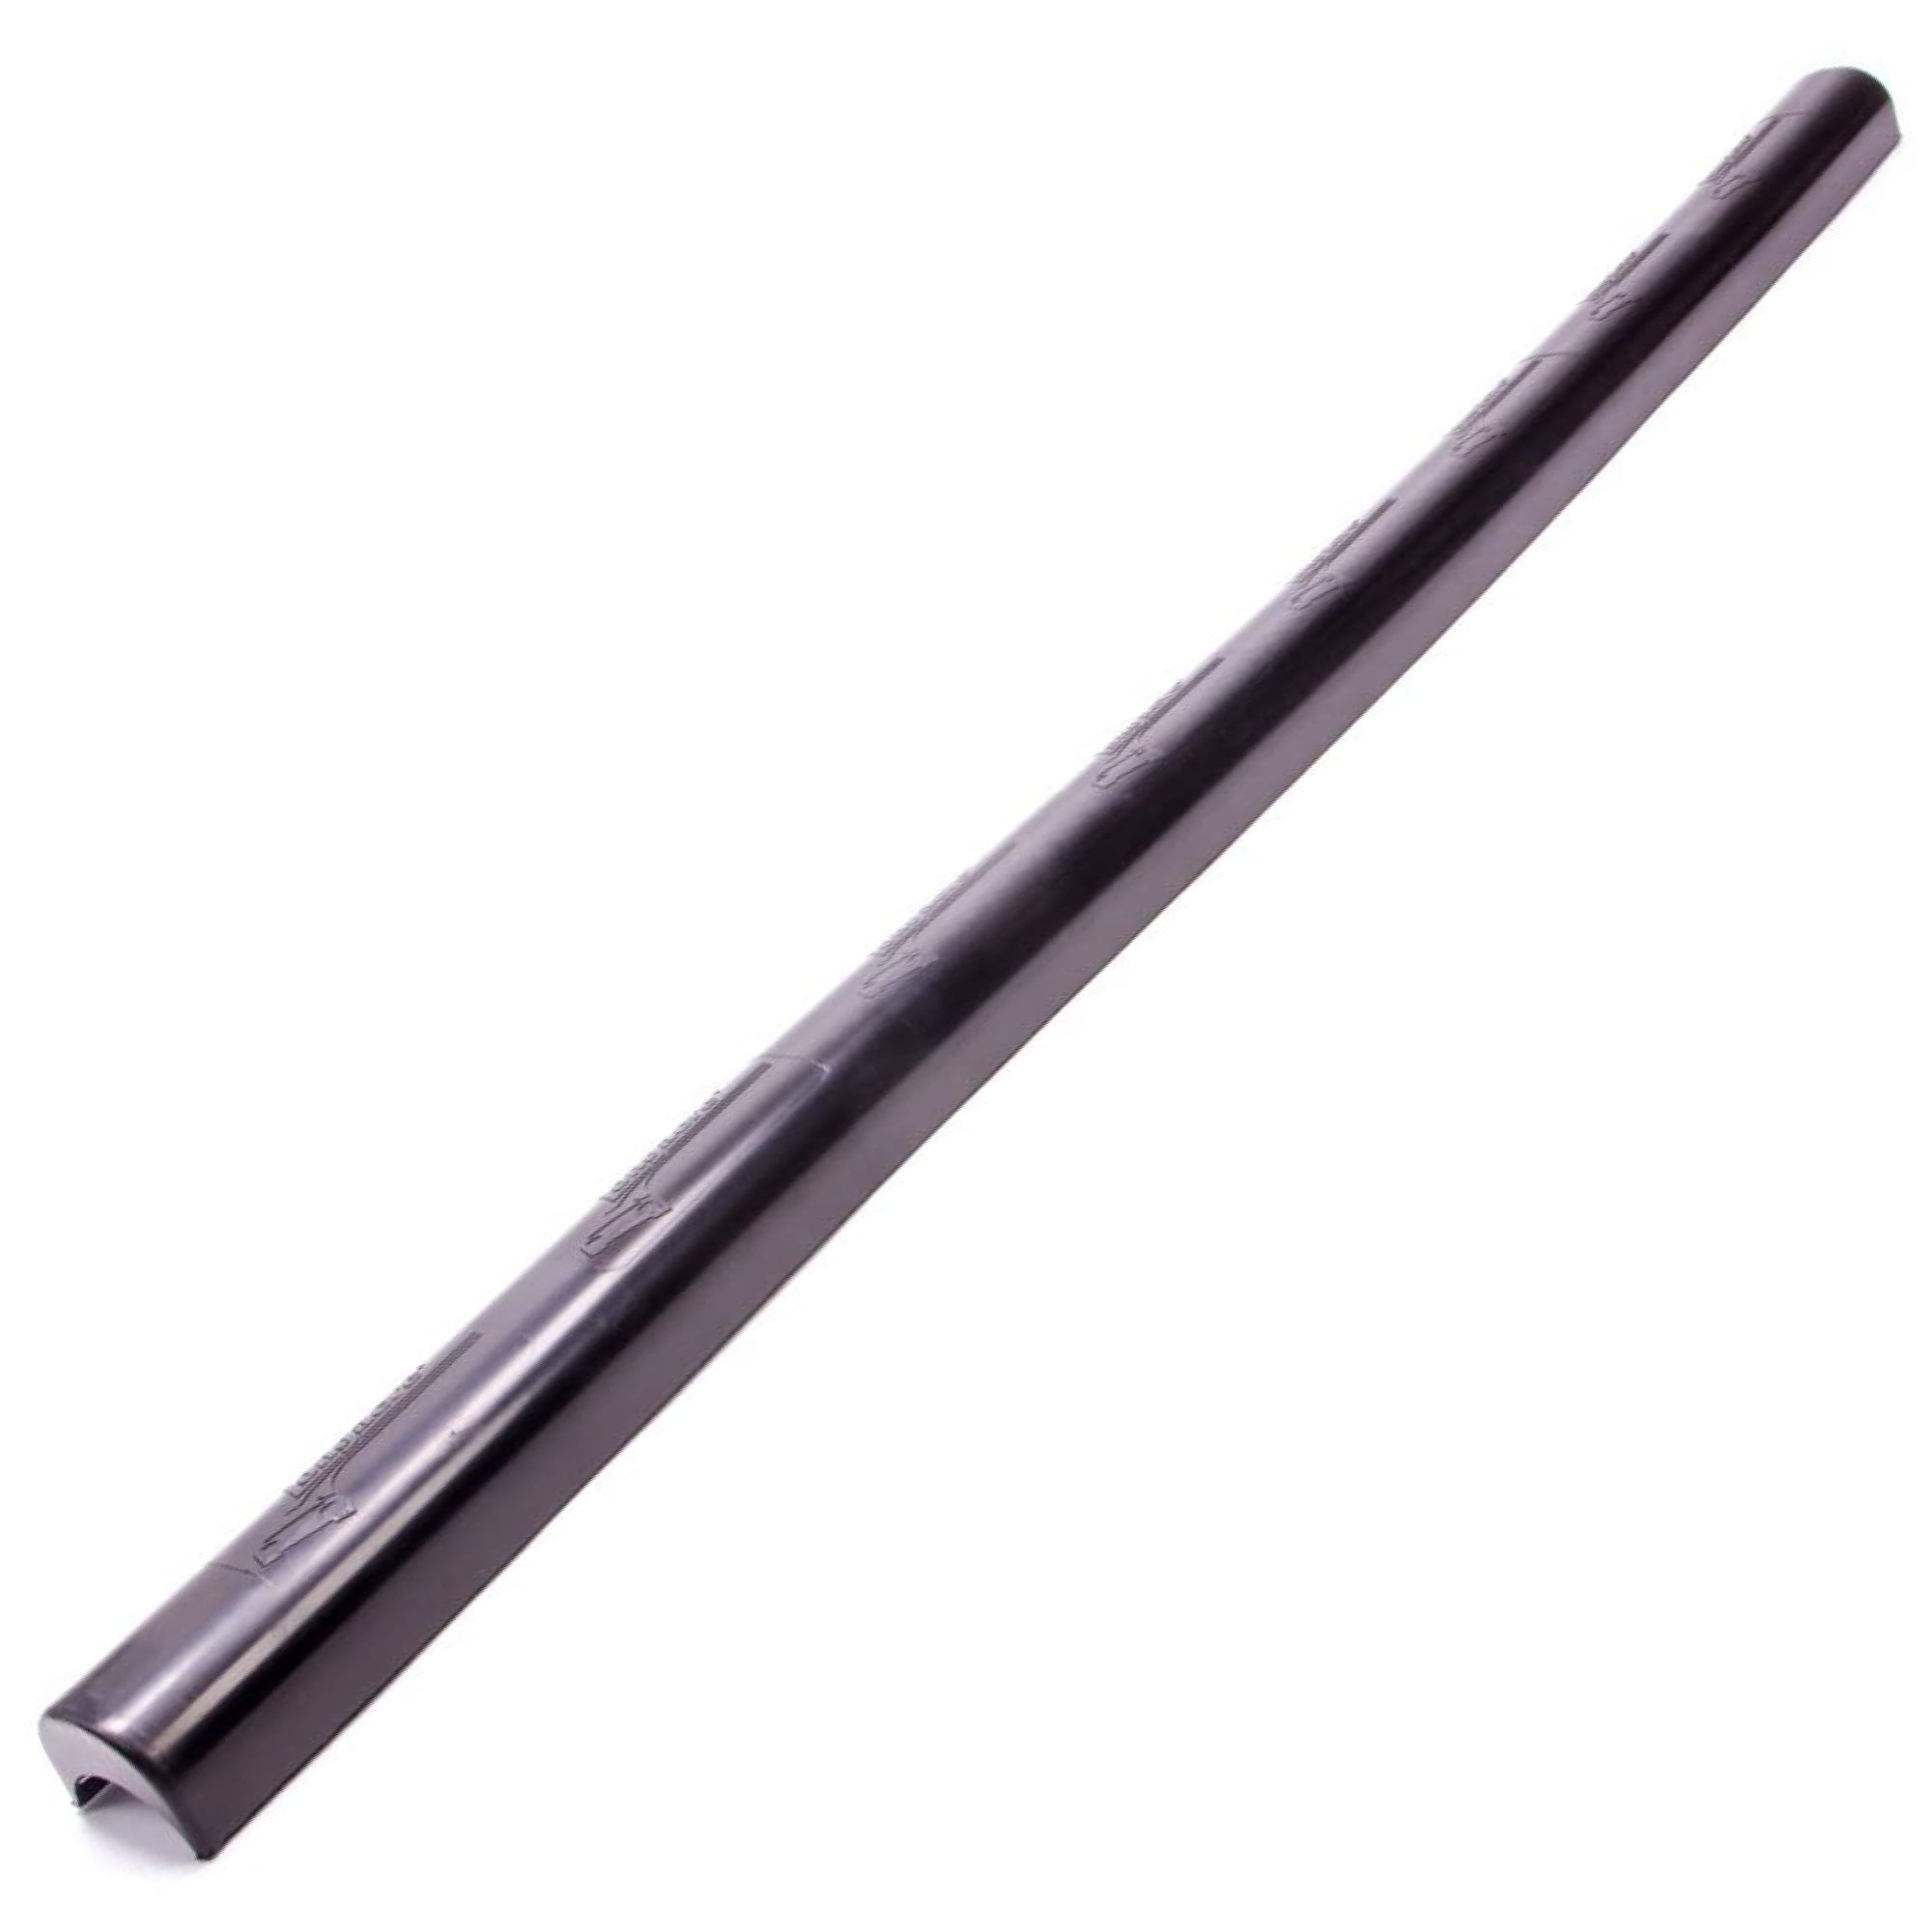 Rollbar Padding BSCI 45.1 (36 Lengths)